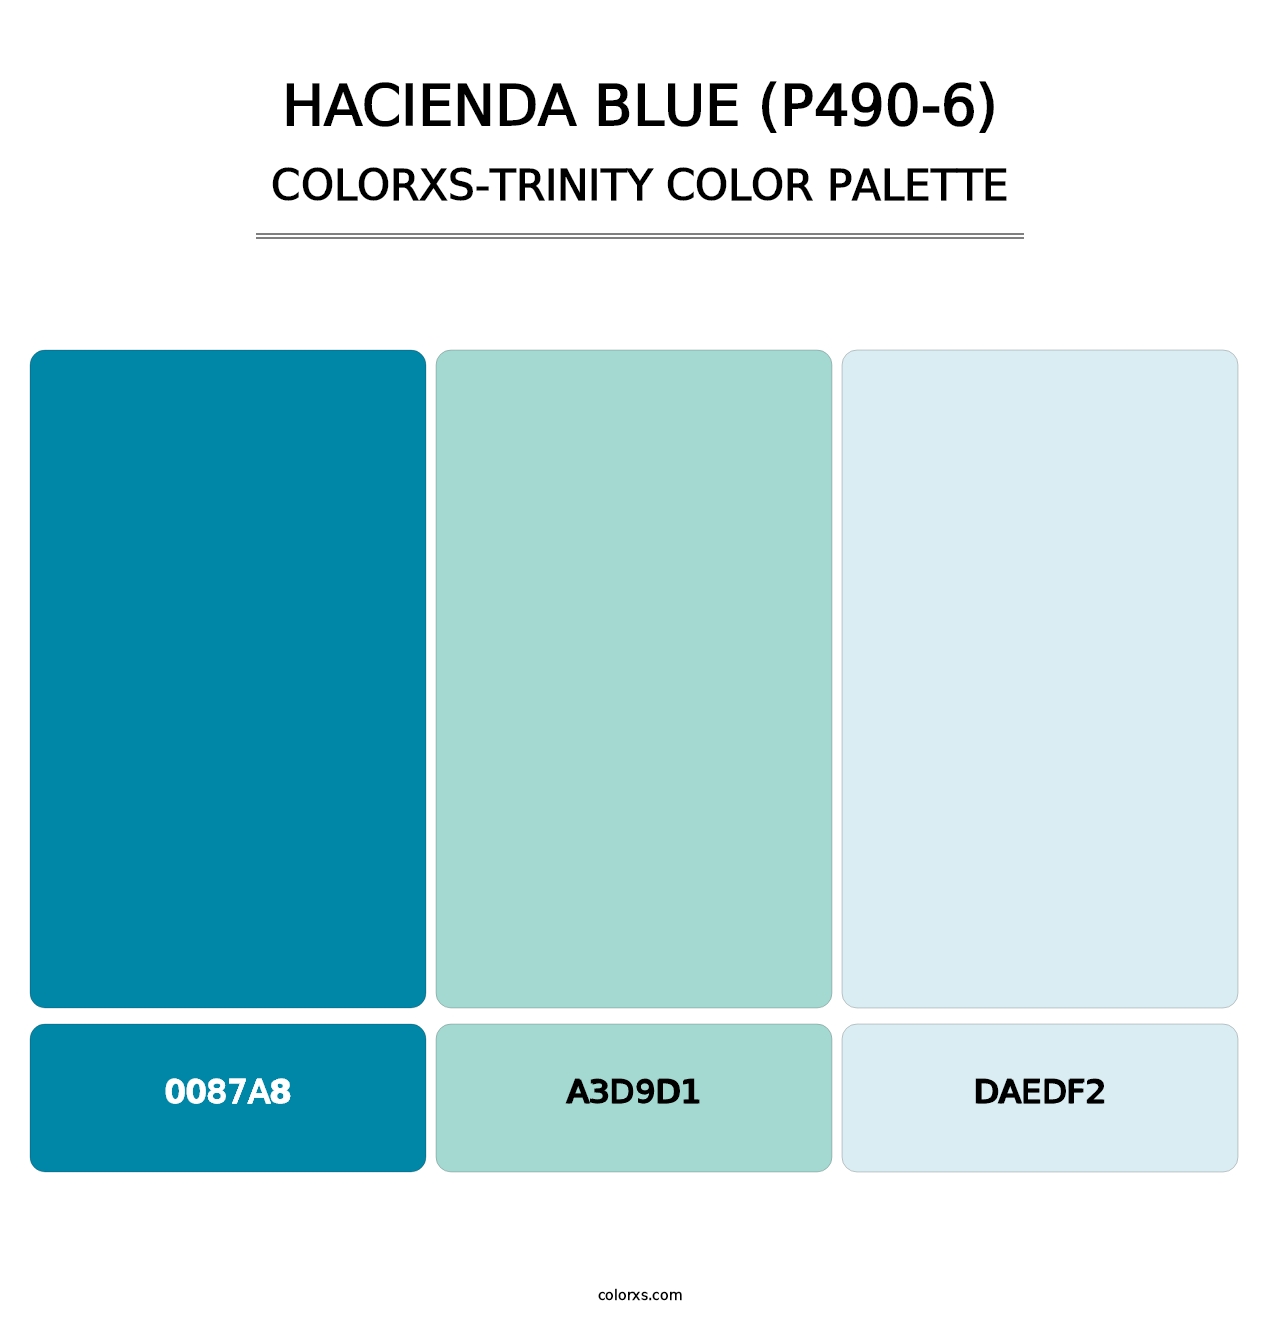 Hacienda Blue (P490-6) - Colorxs Trinity Palette